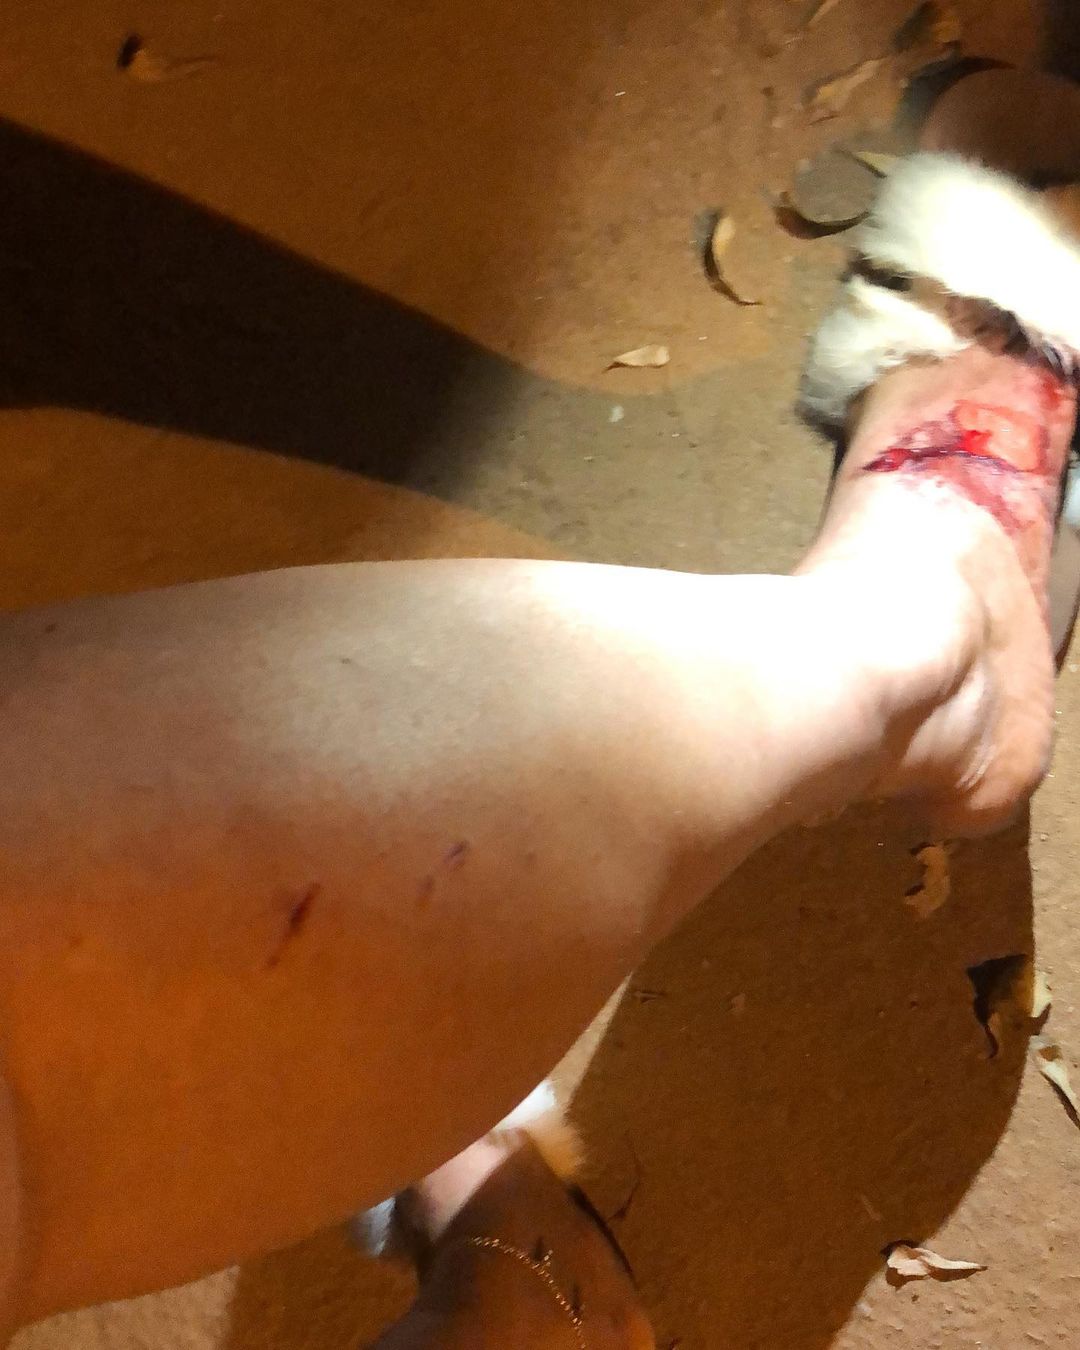 Chiwendu with a bleeding leg